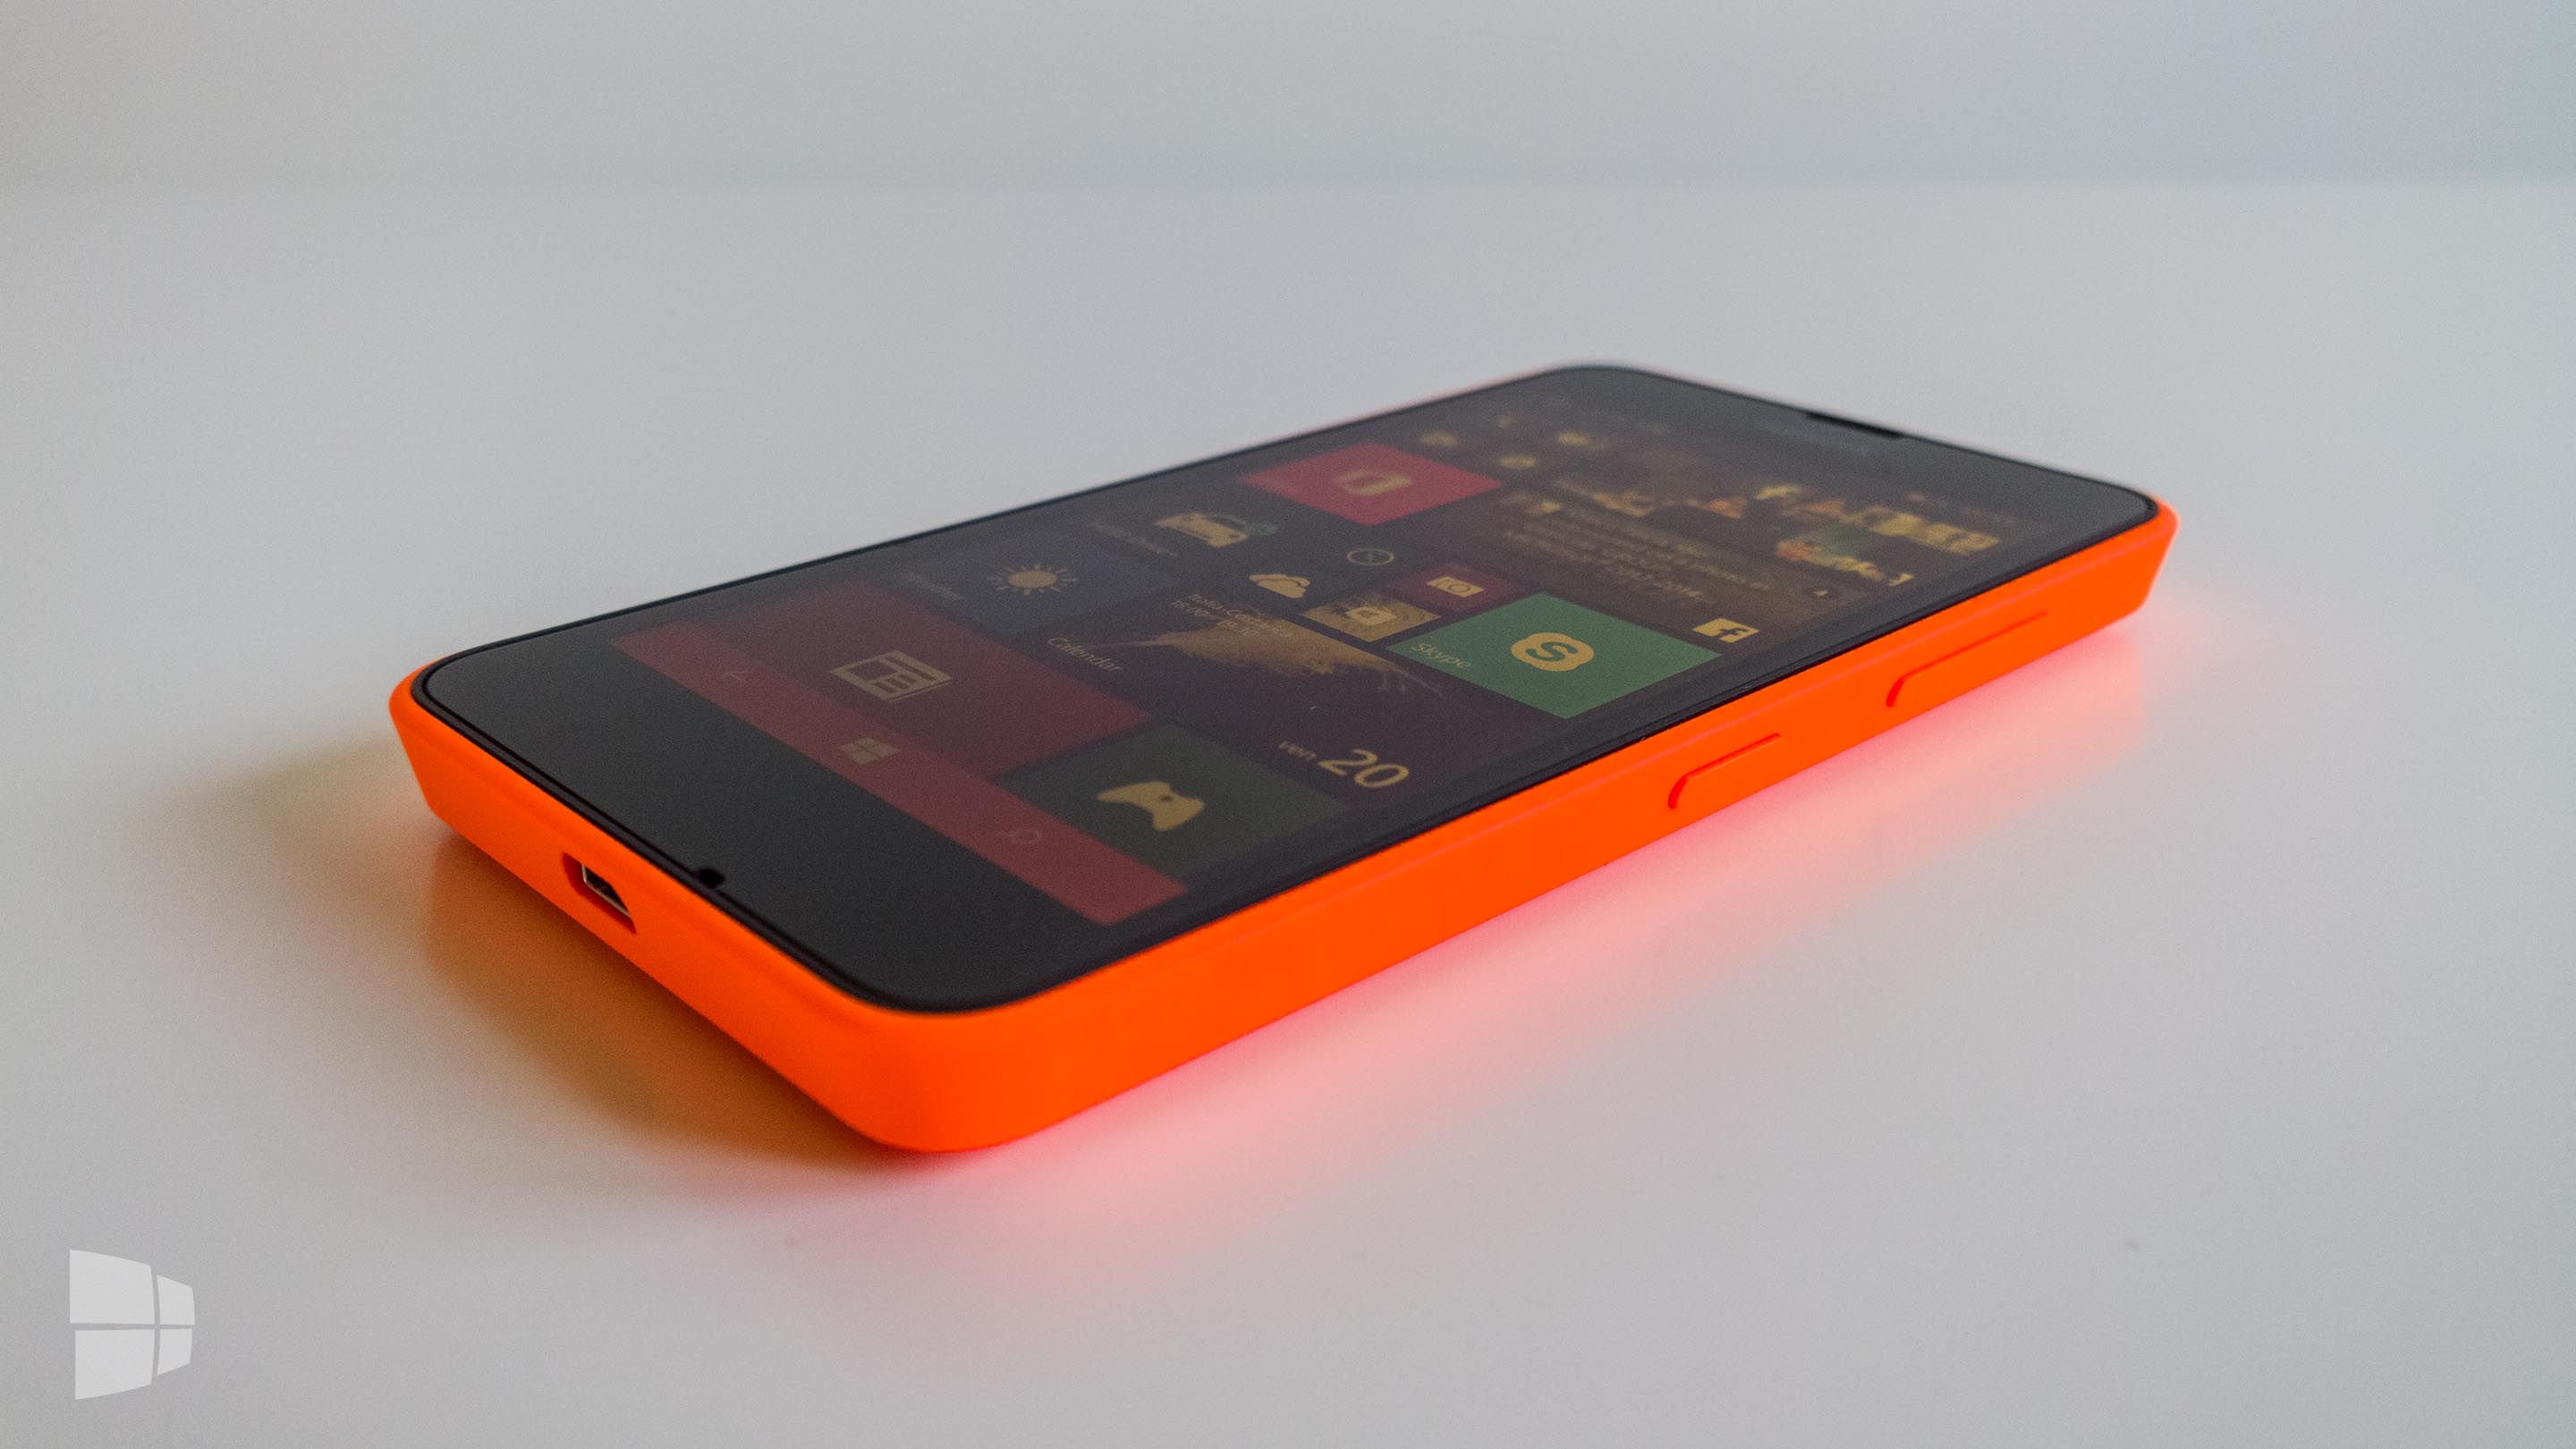 Nokia Lumia 630 Side